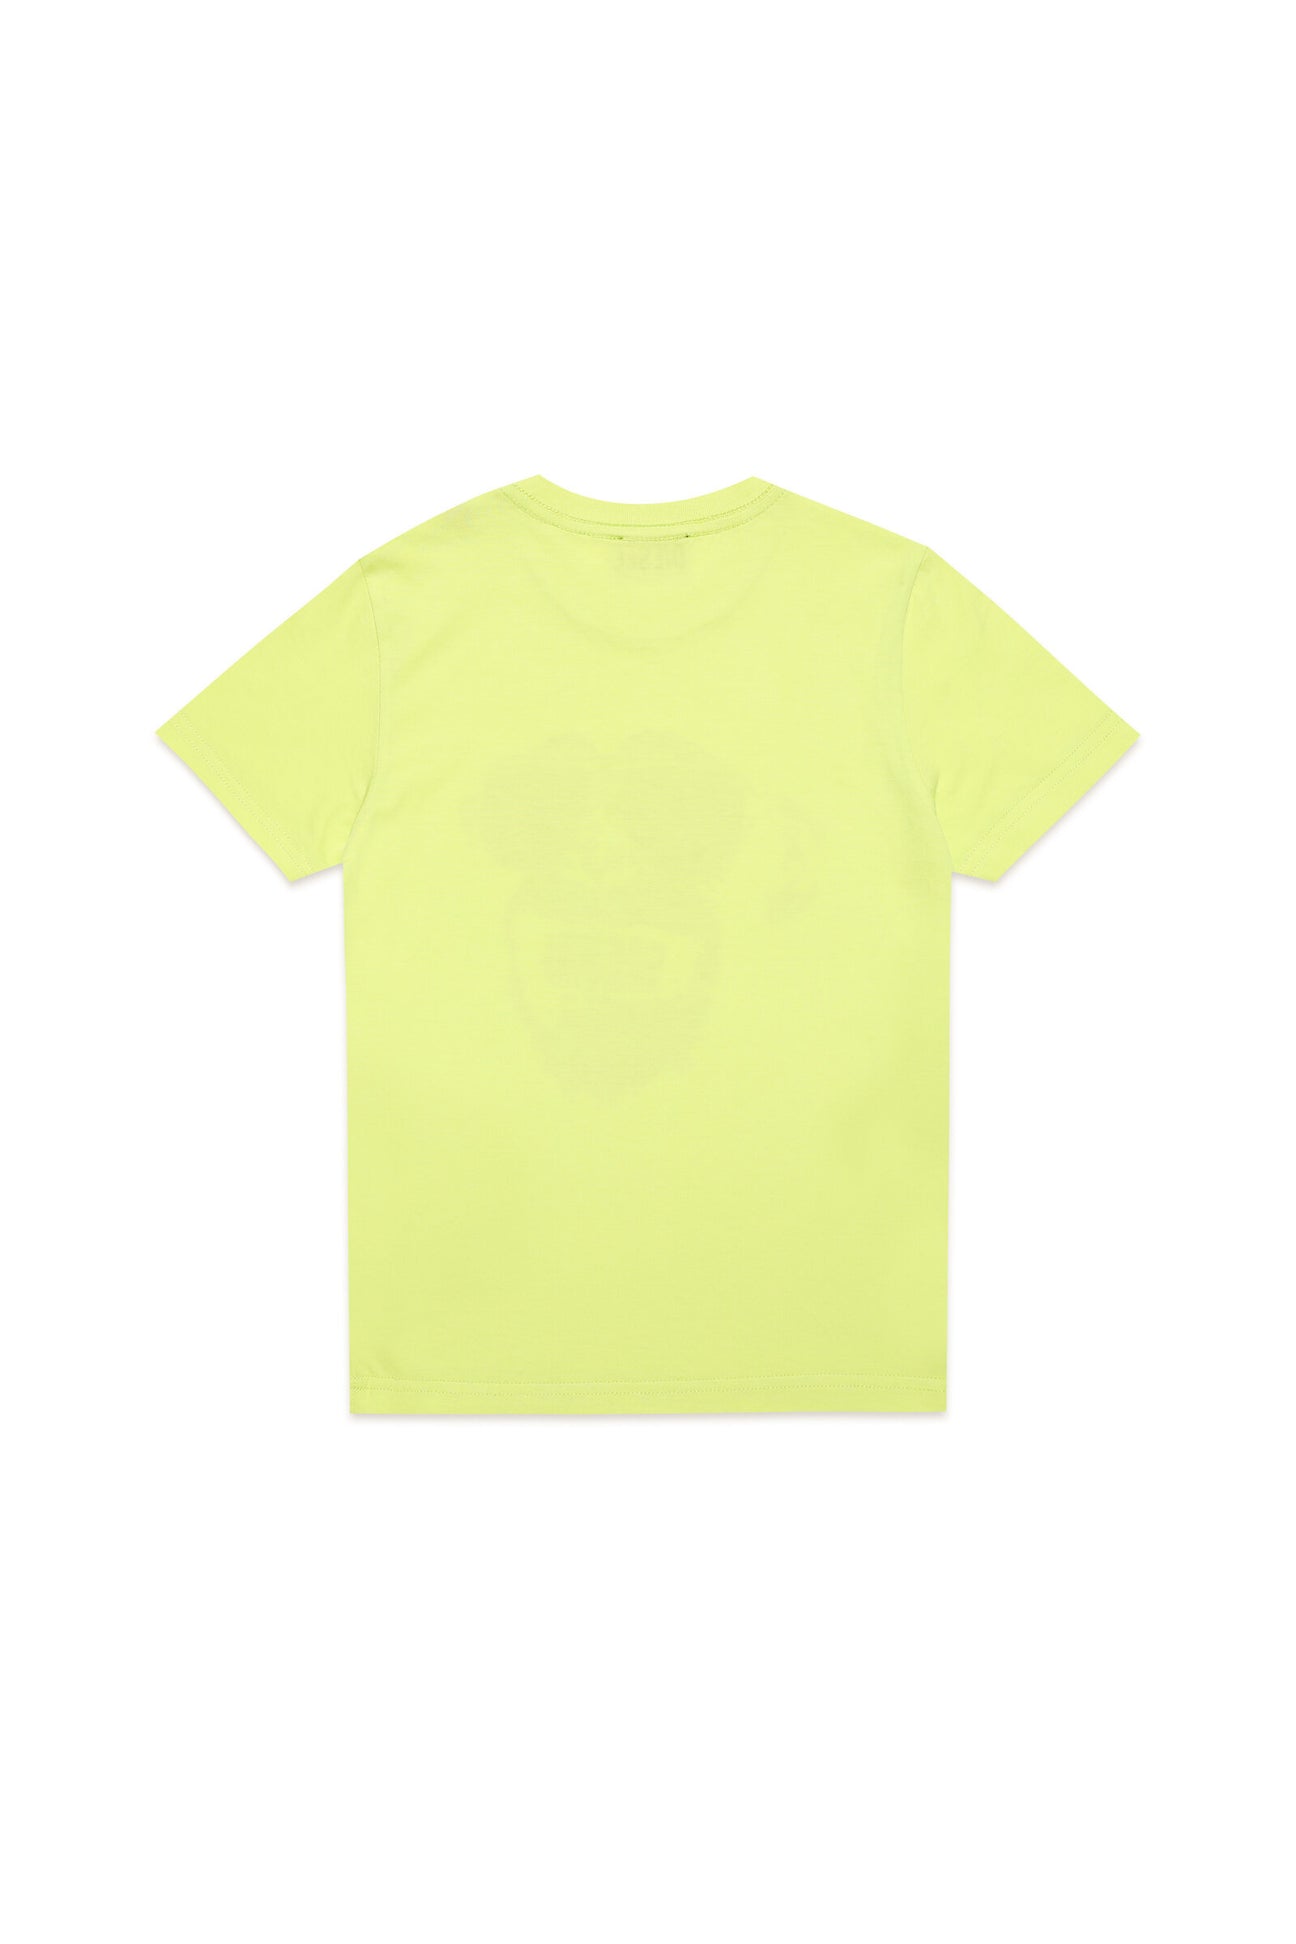 T-shirt gialla con stampa Monkey effetto metallizzato T-shirt gialla con stampa Monkey effetto metallizzato